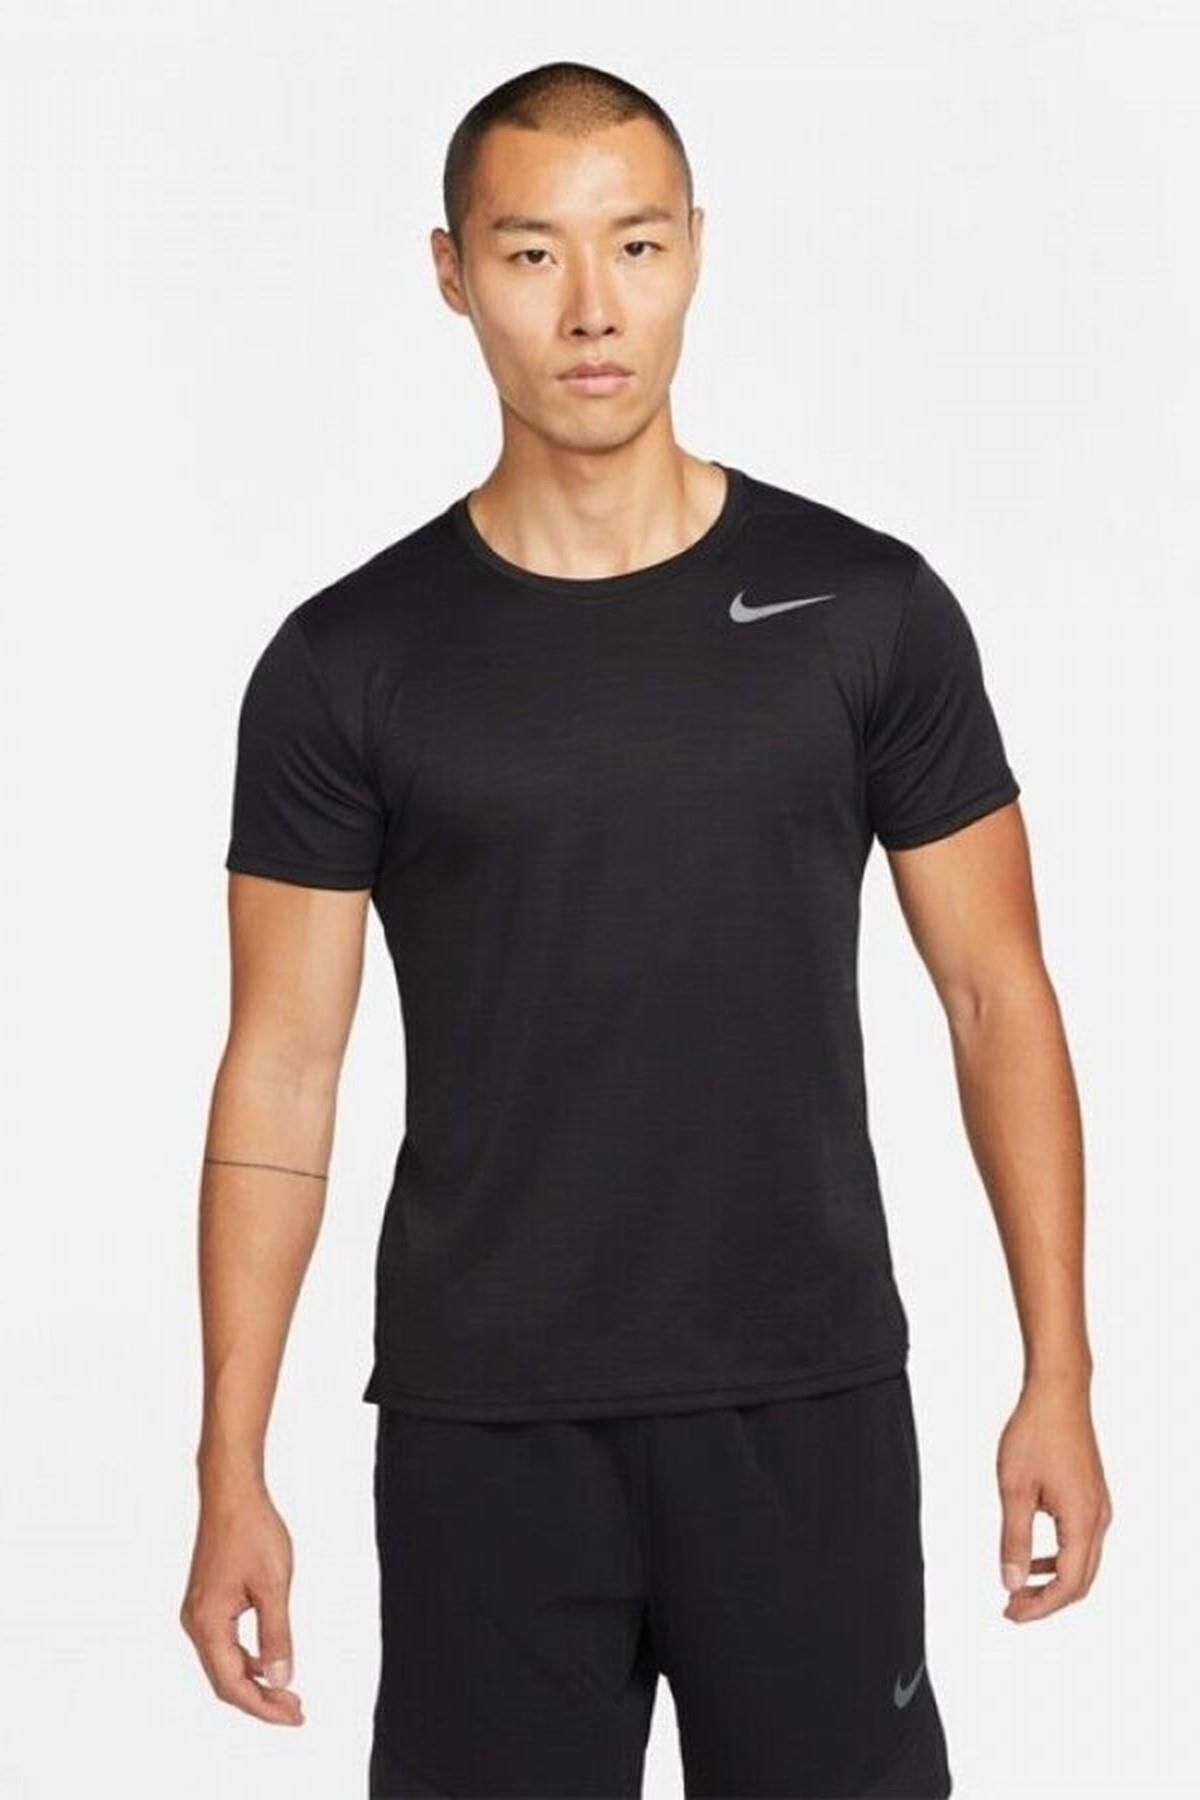 Nike Dri Fit Superset Top Mens Training Tee Erkek Koşu Antrenman Tişörtü Siyah